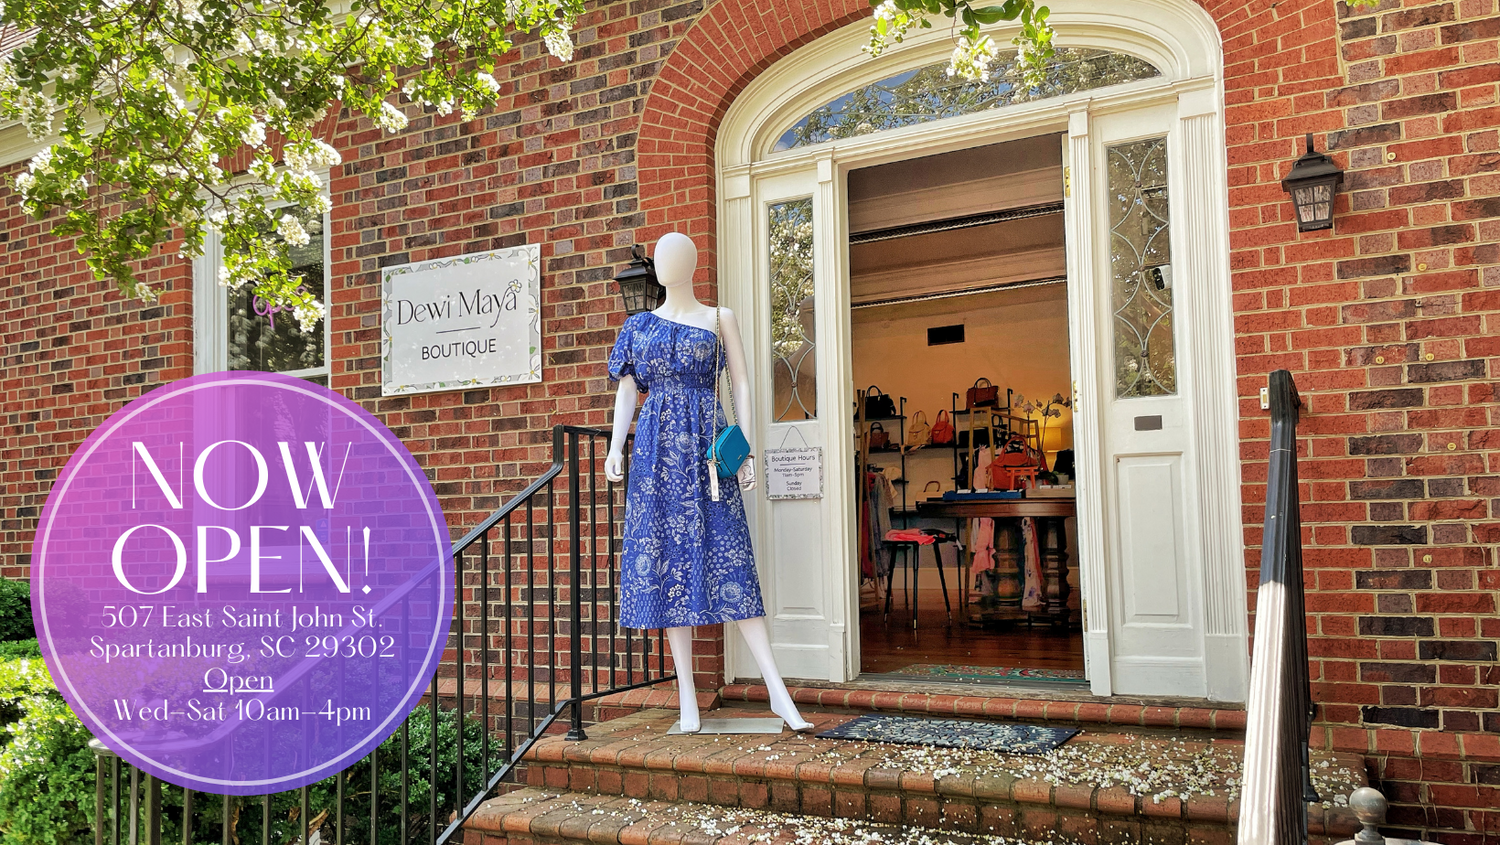 Dewi Maya Boutique now open in downtown Spartanburg South Carolina at 507 East Saint John Street